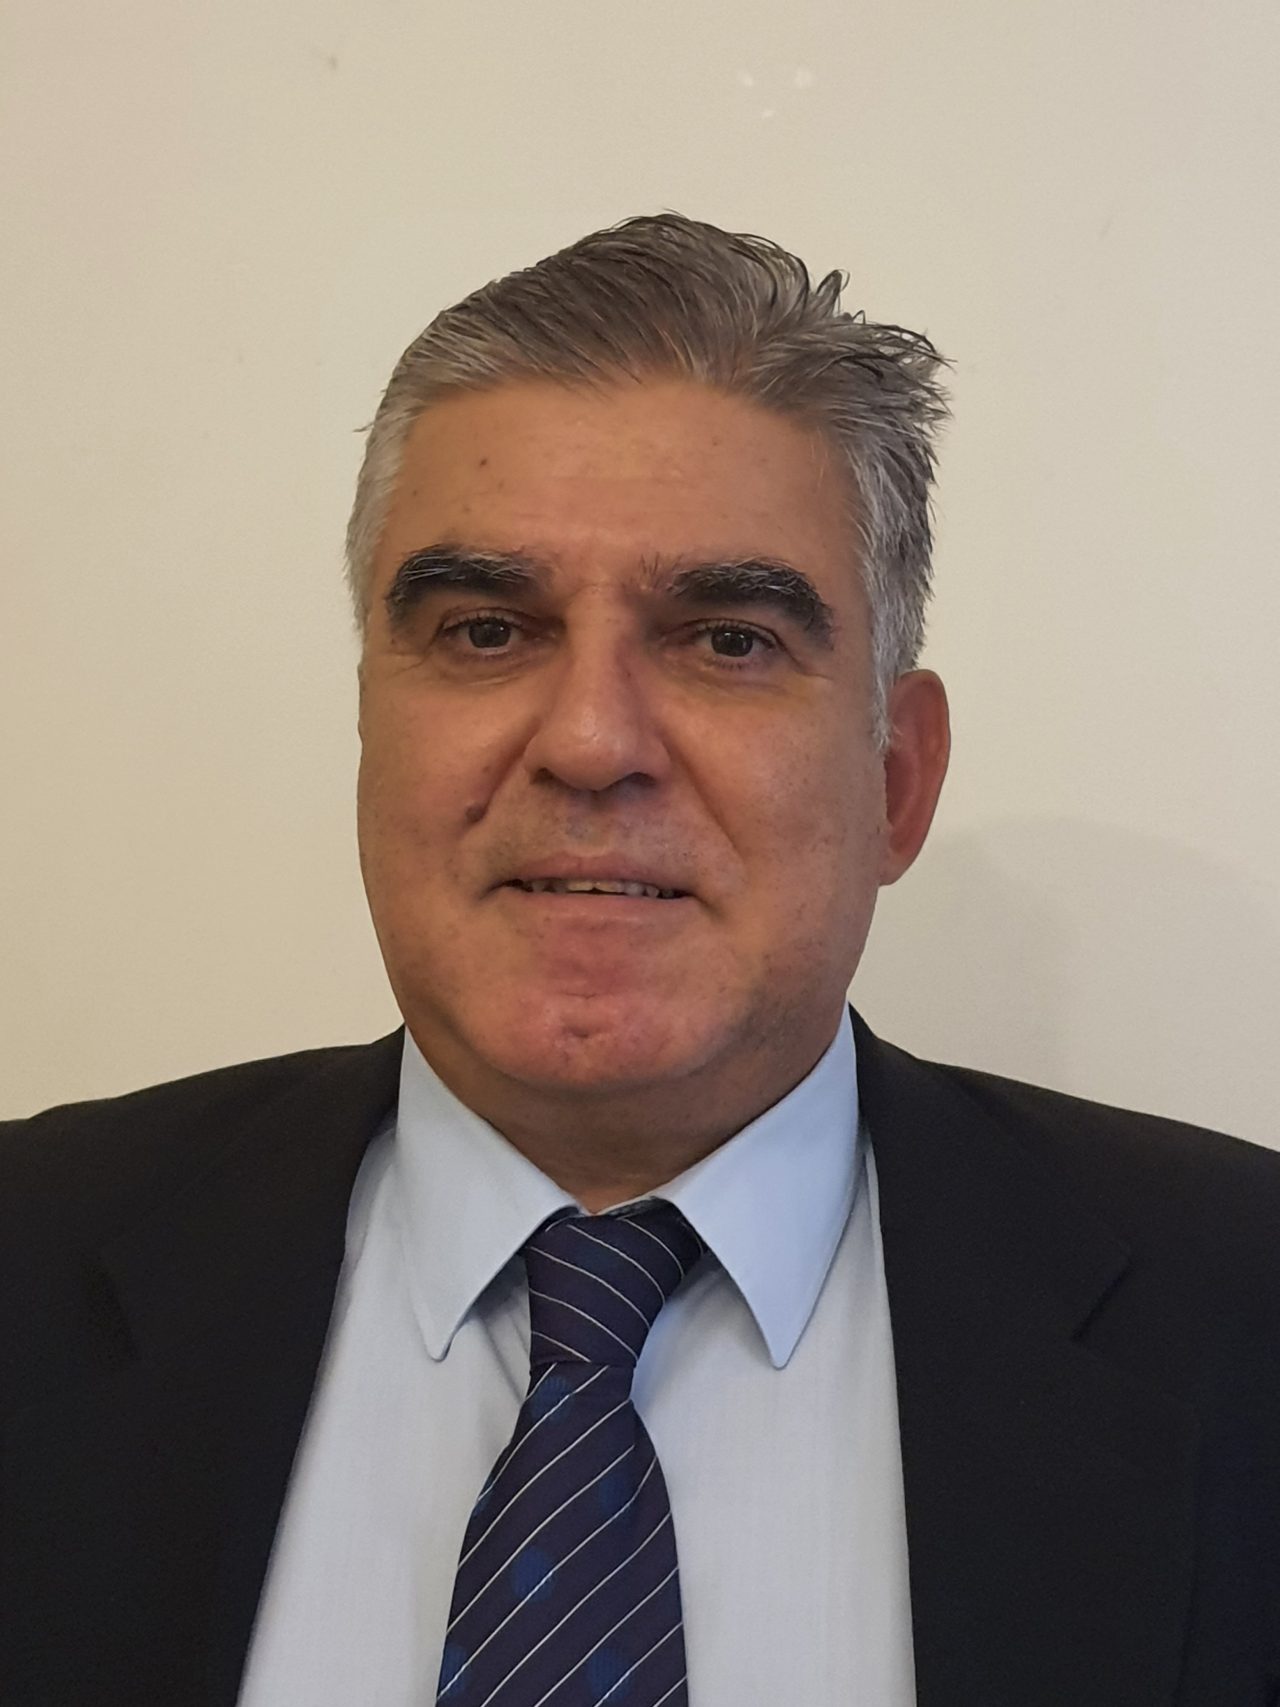 Dr. Αβραάμ Μαστοράκης (ΣΙΔΕΝΟΡ): Η ζήτηση προϊόντων με EPD βαίνει αυξανόμενη όπως και η ζήτηση για πράσινα κτήρια